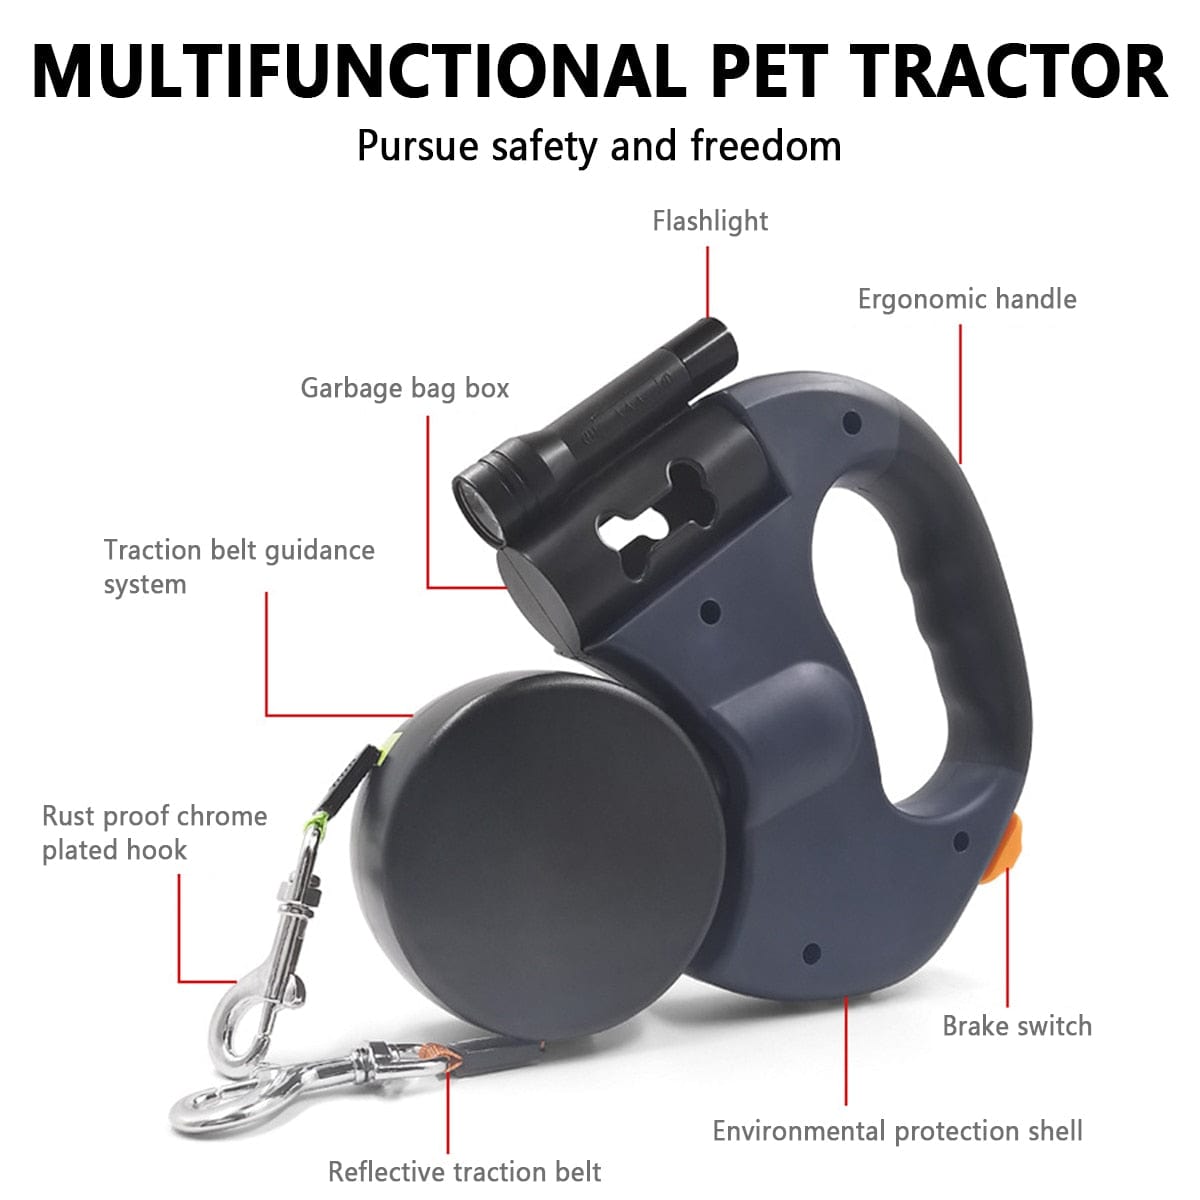 Dog and Pet Stuff Automatic Dual Retractable Dog Leash